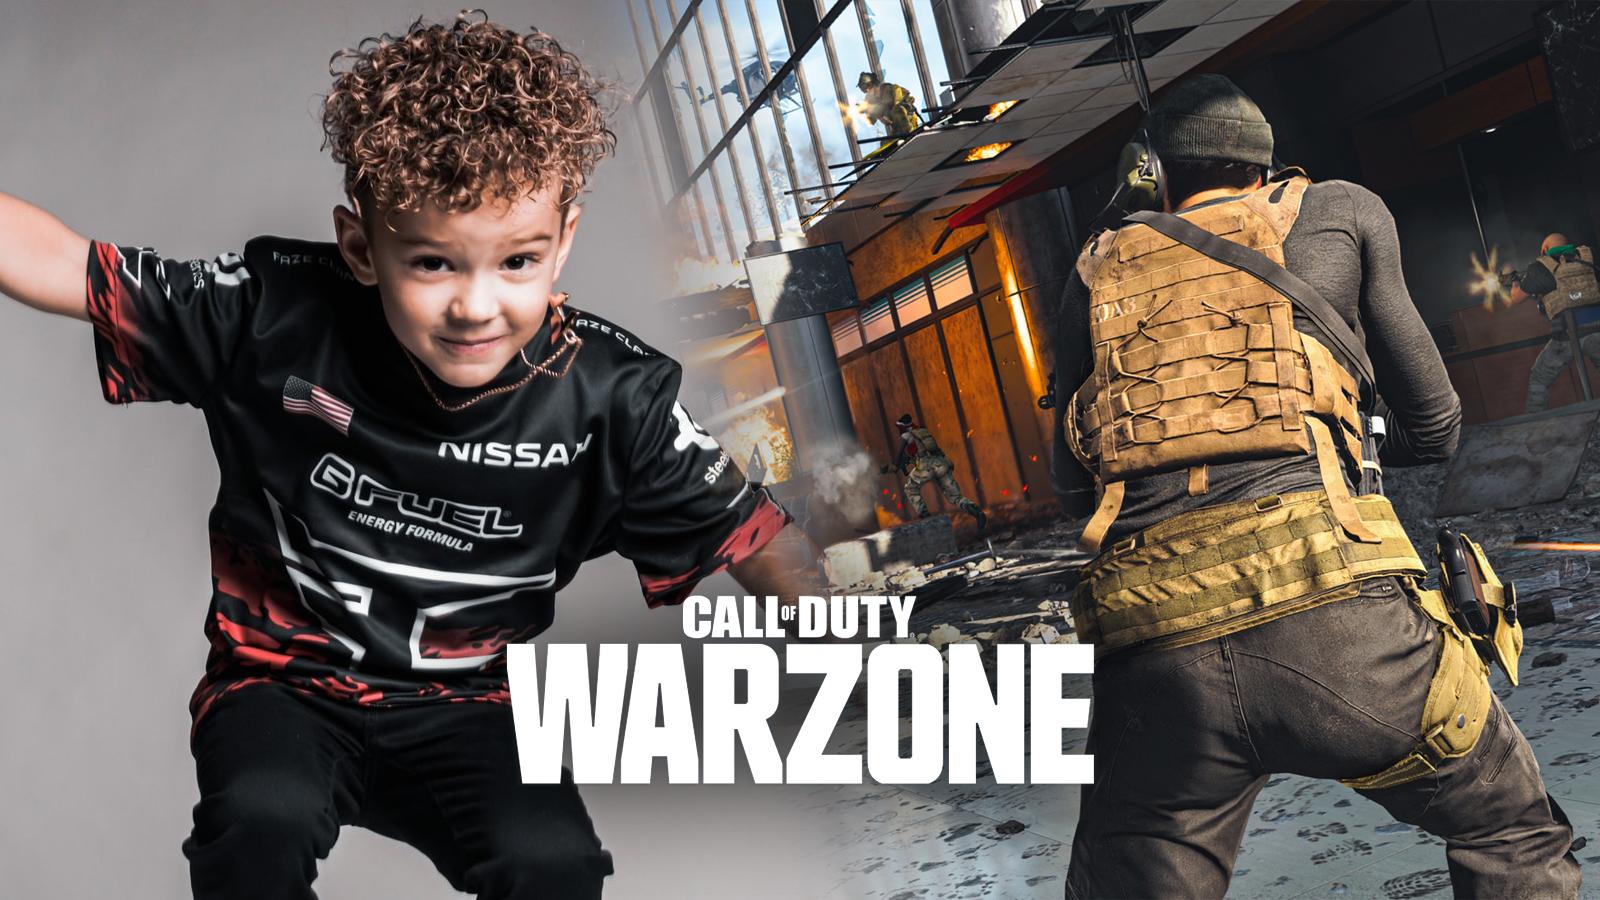 RowdyRogan in FaZe Clan jersey next to Call of Duty Warzone gameplay